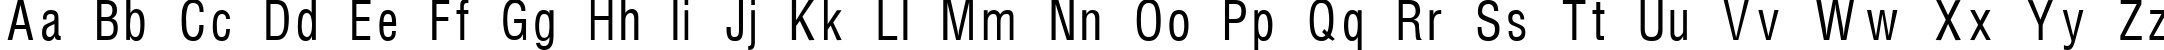 Пример написания английского алфавита шрифтом HelvCondenced90